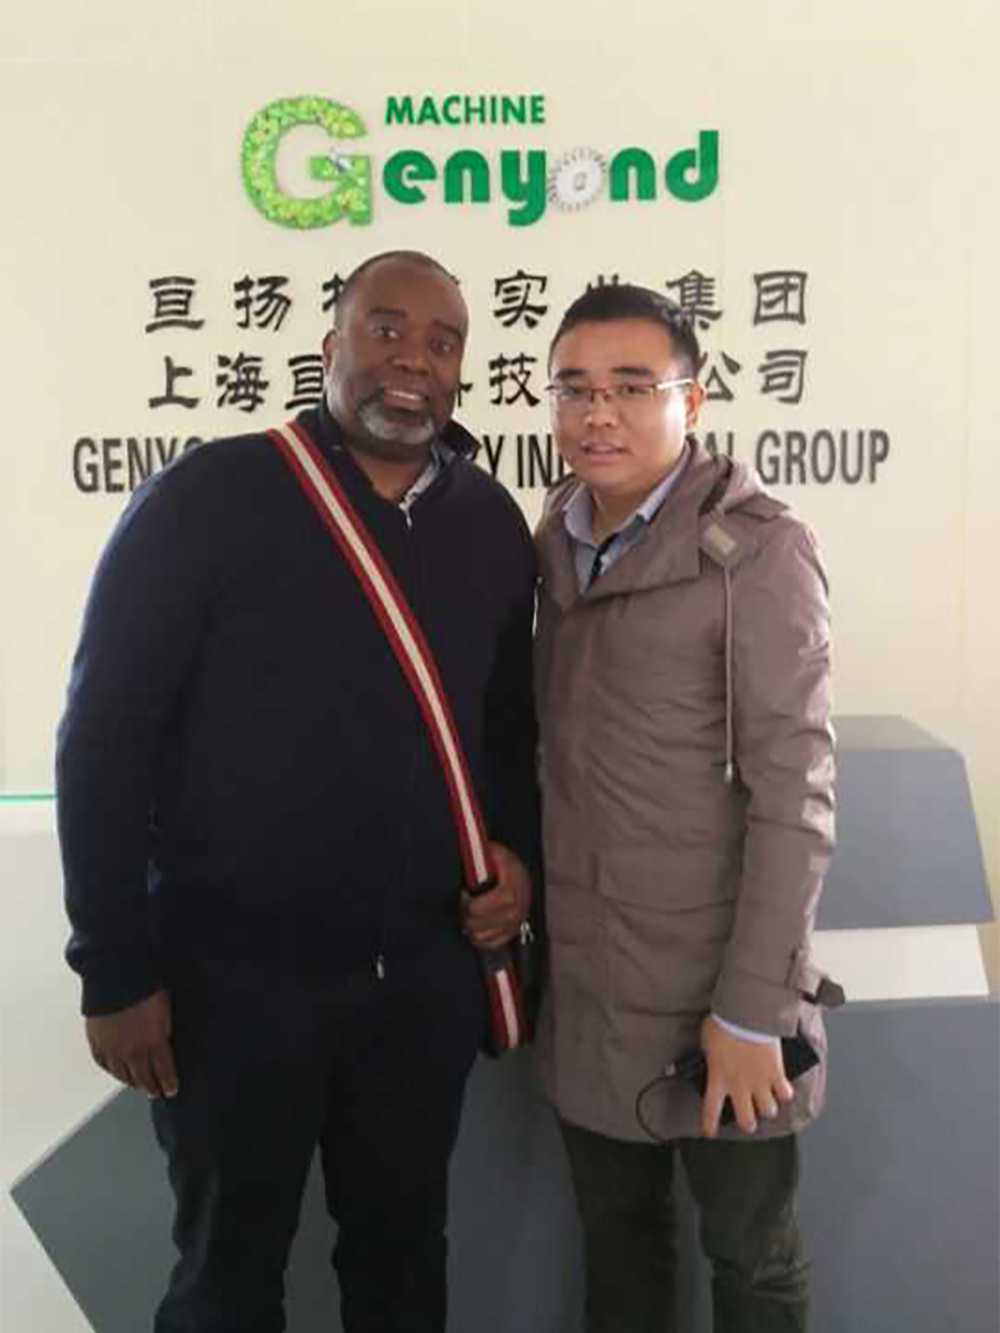 Prensa de aceite automática - Shanghai Genyond Technology Co Ltd - de oliva  / de aguacate